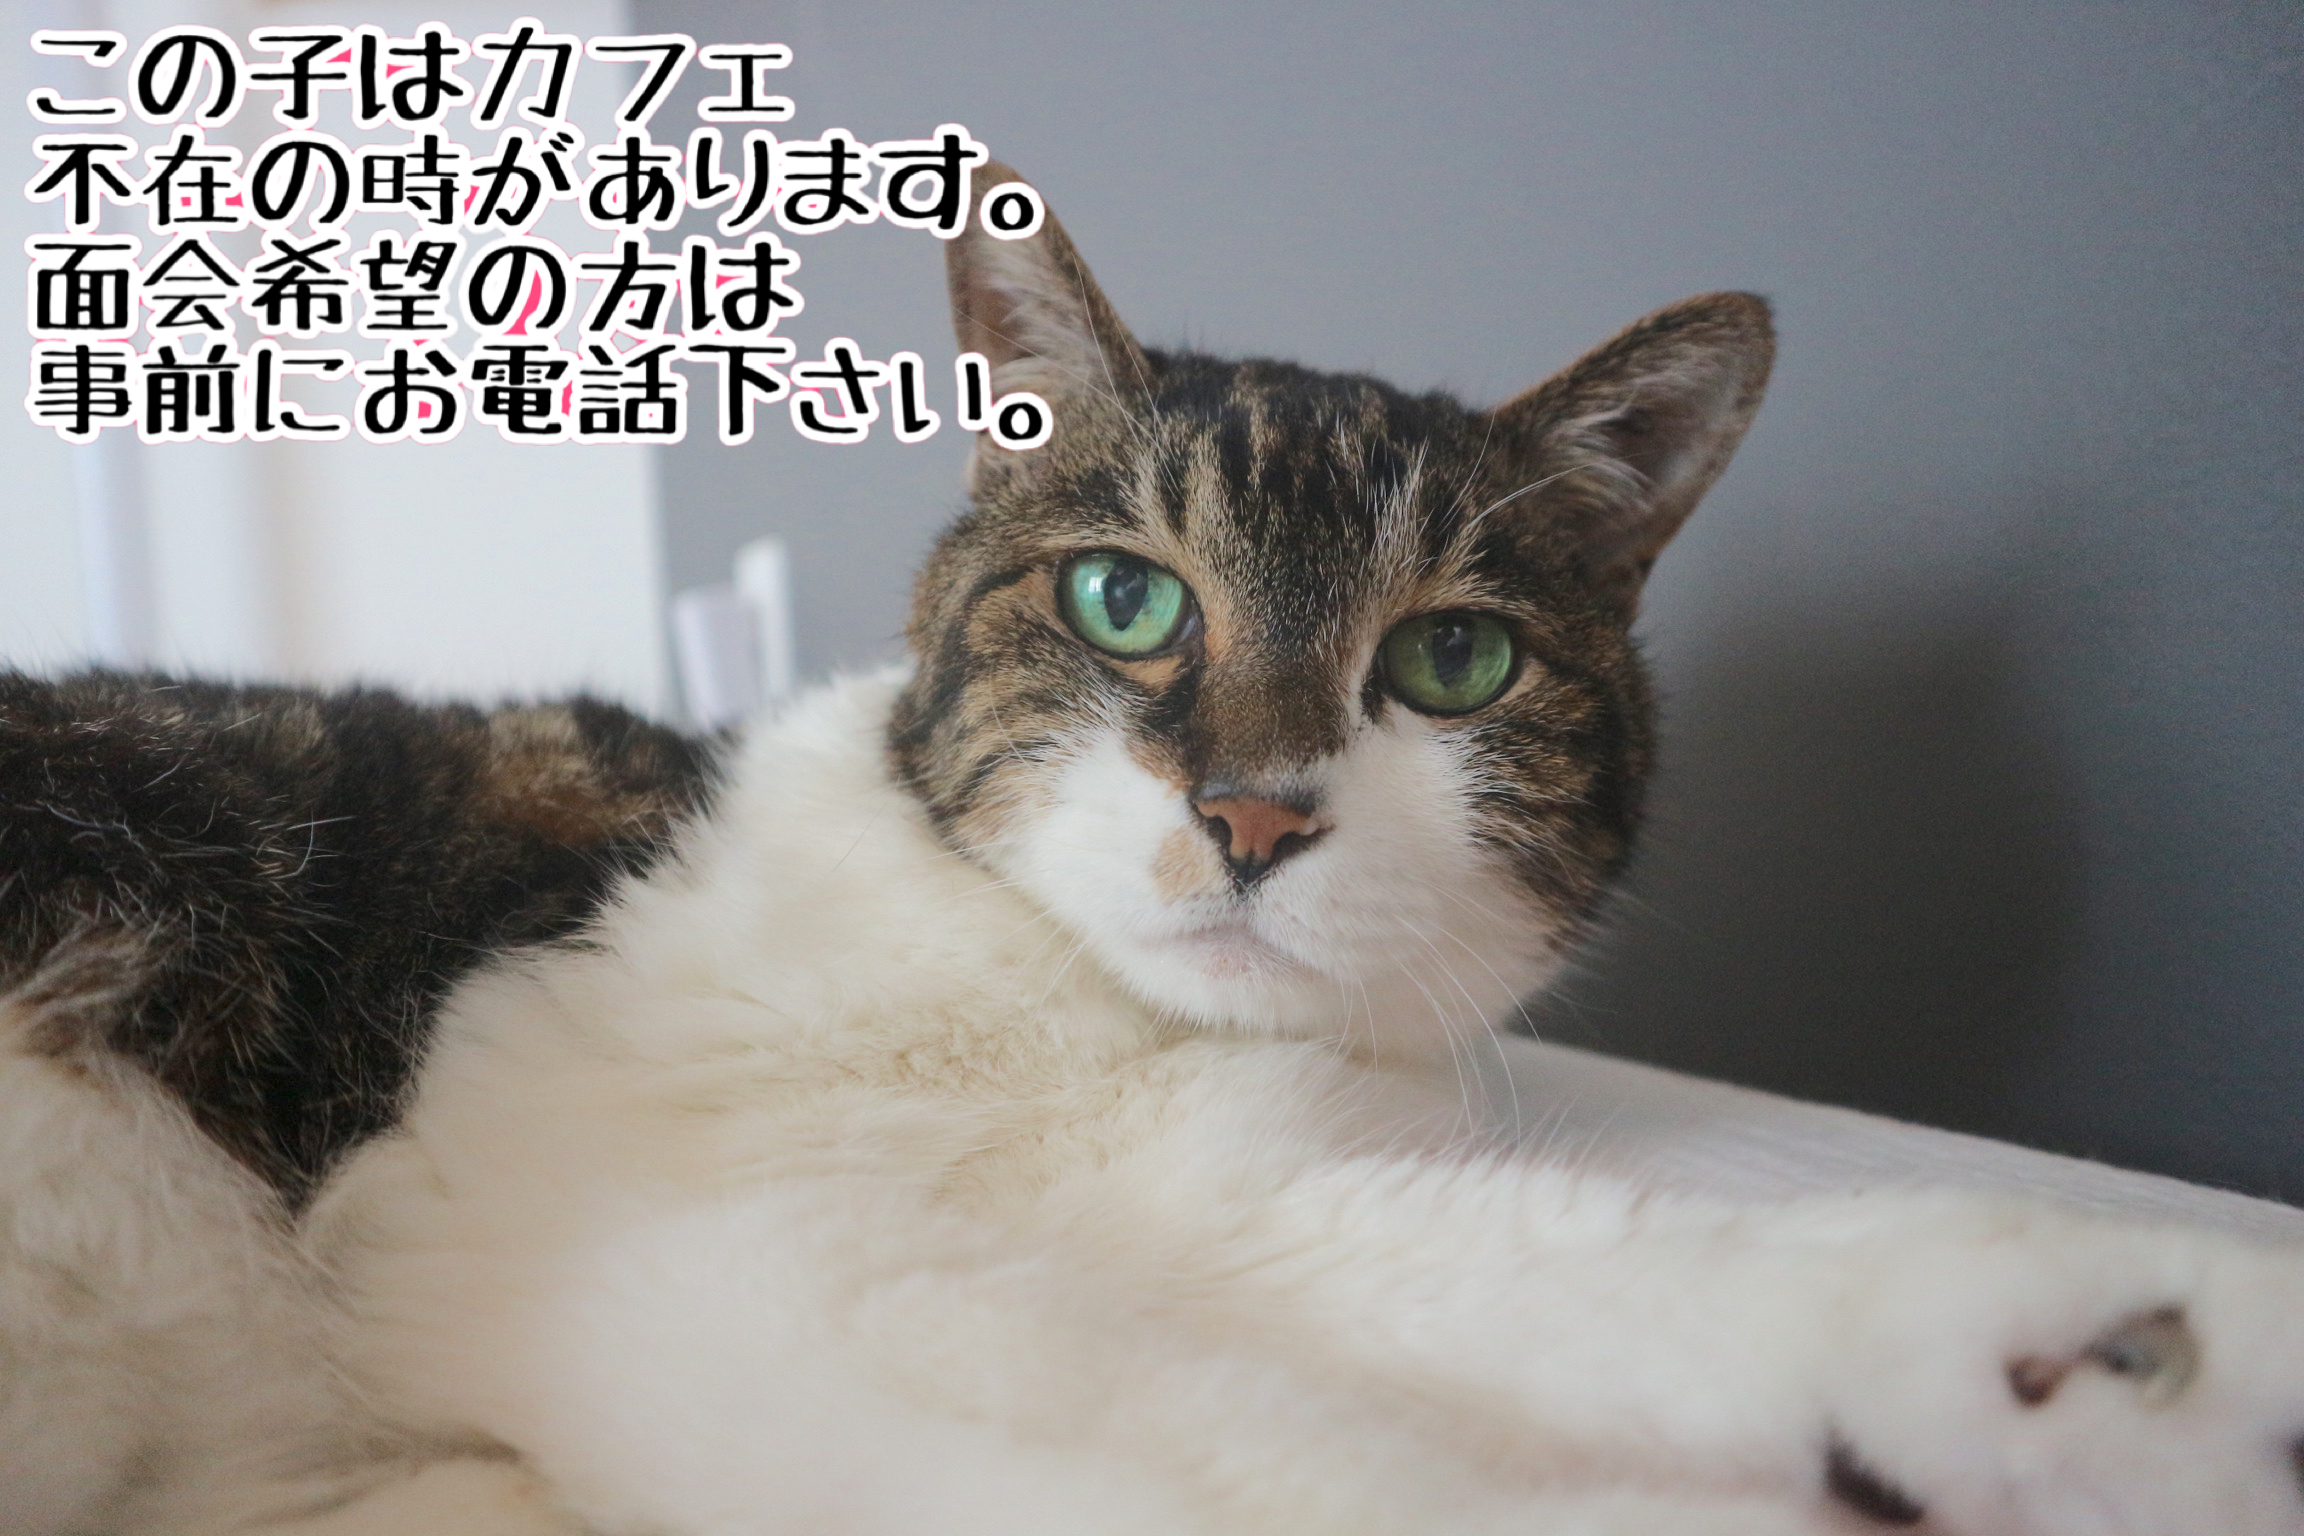 <ul>
<li>猫種：日本猫</li>
<li>名前（性別）：ぽぽ(女の子)</li>
<li>年齢：2003年2月頃生まれ</li>
<li>保護経緯：飼い主が高齢になり施設入居のため飼育困難</li>
</ul>
